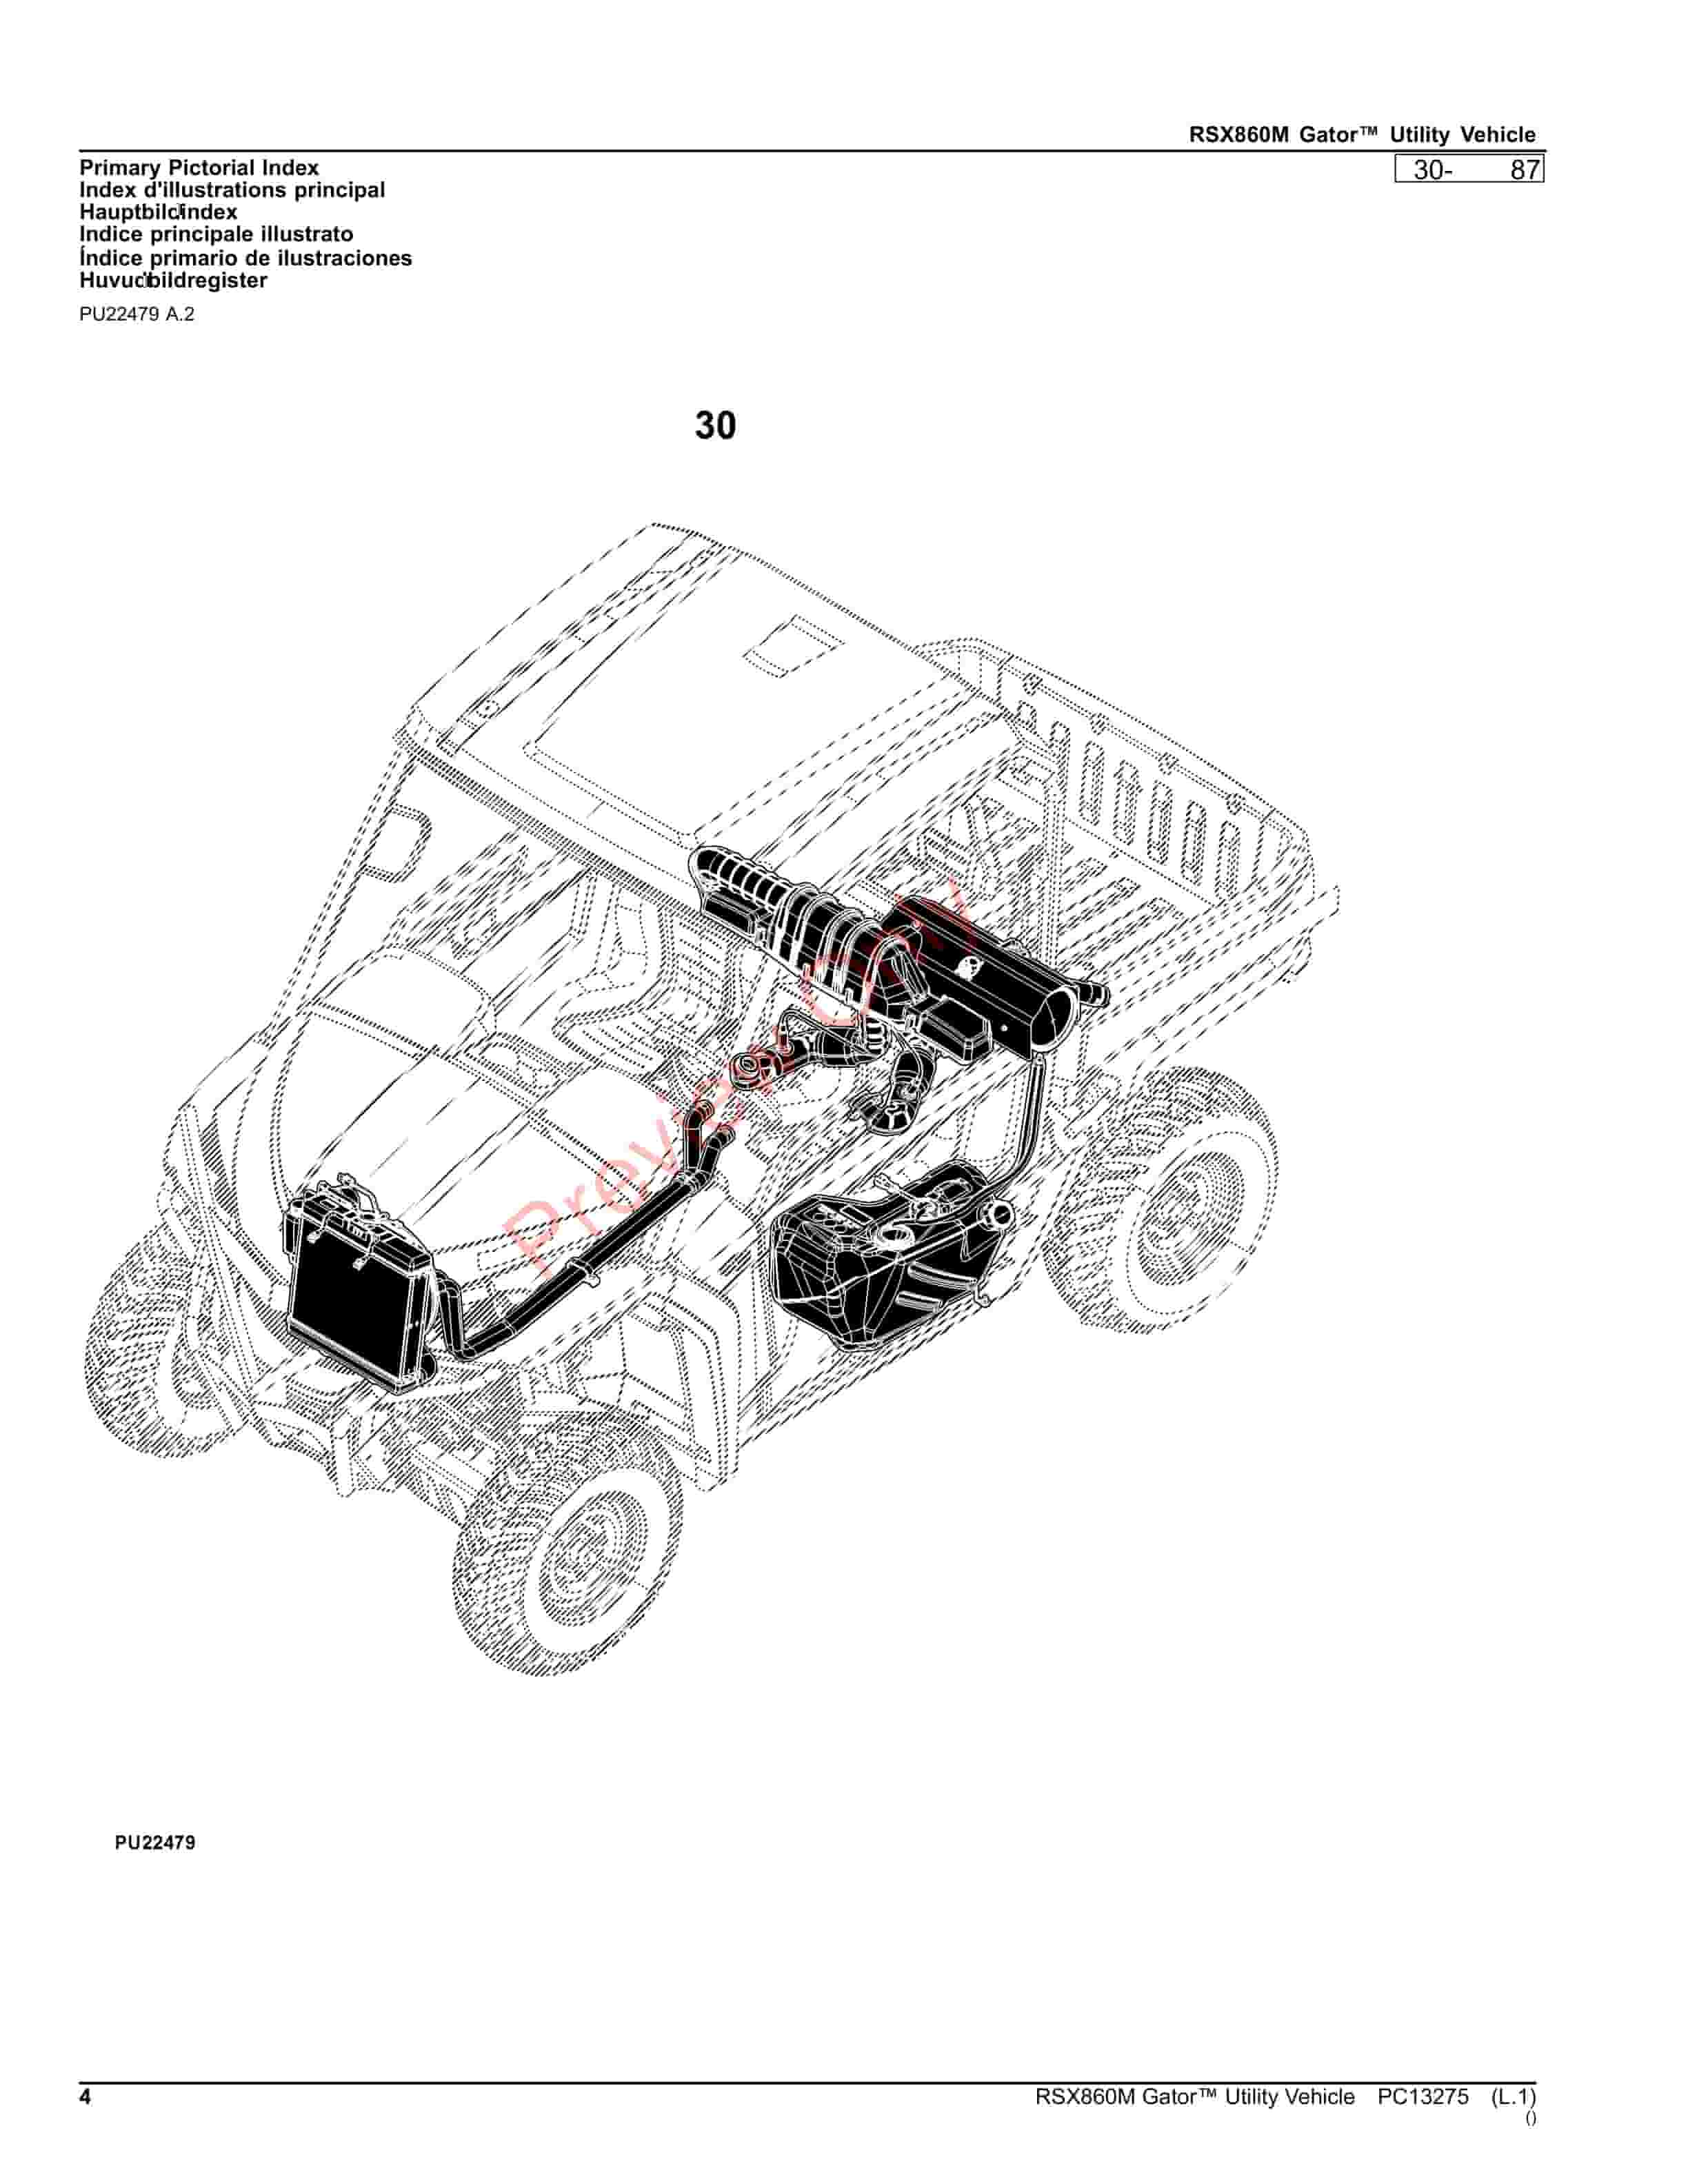 John Deere RSX860M Gator Utility Vehicle Parts Catalog PC13275 14SEP23-4